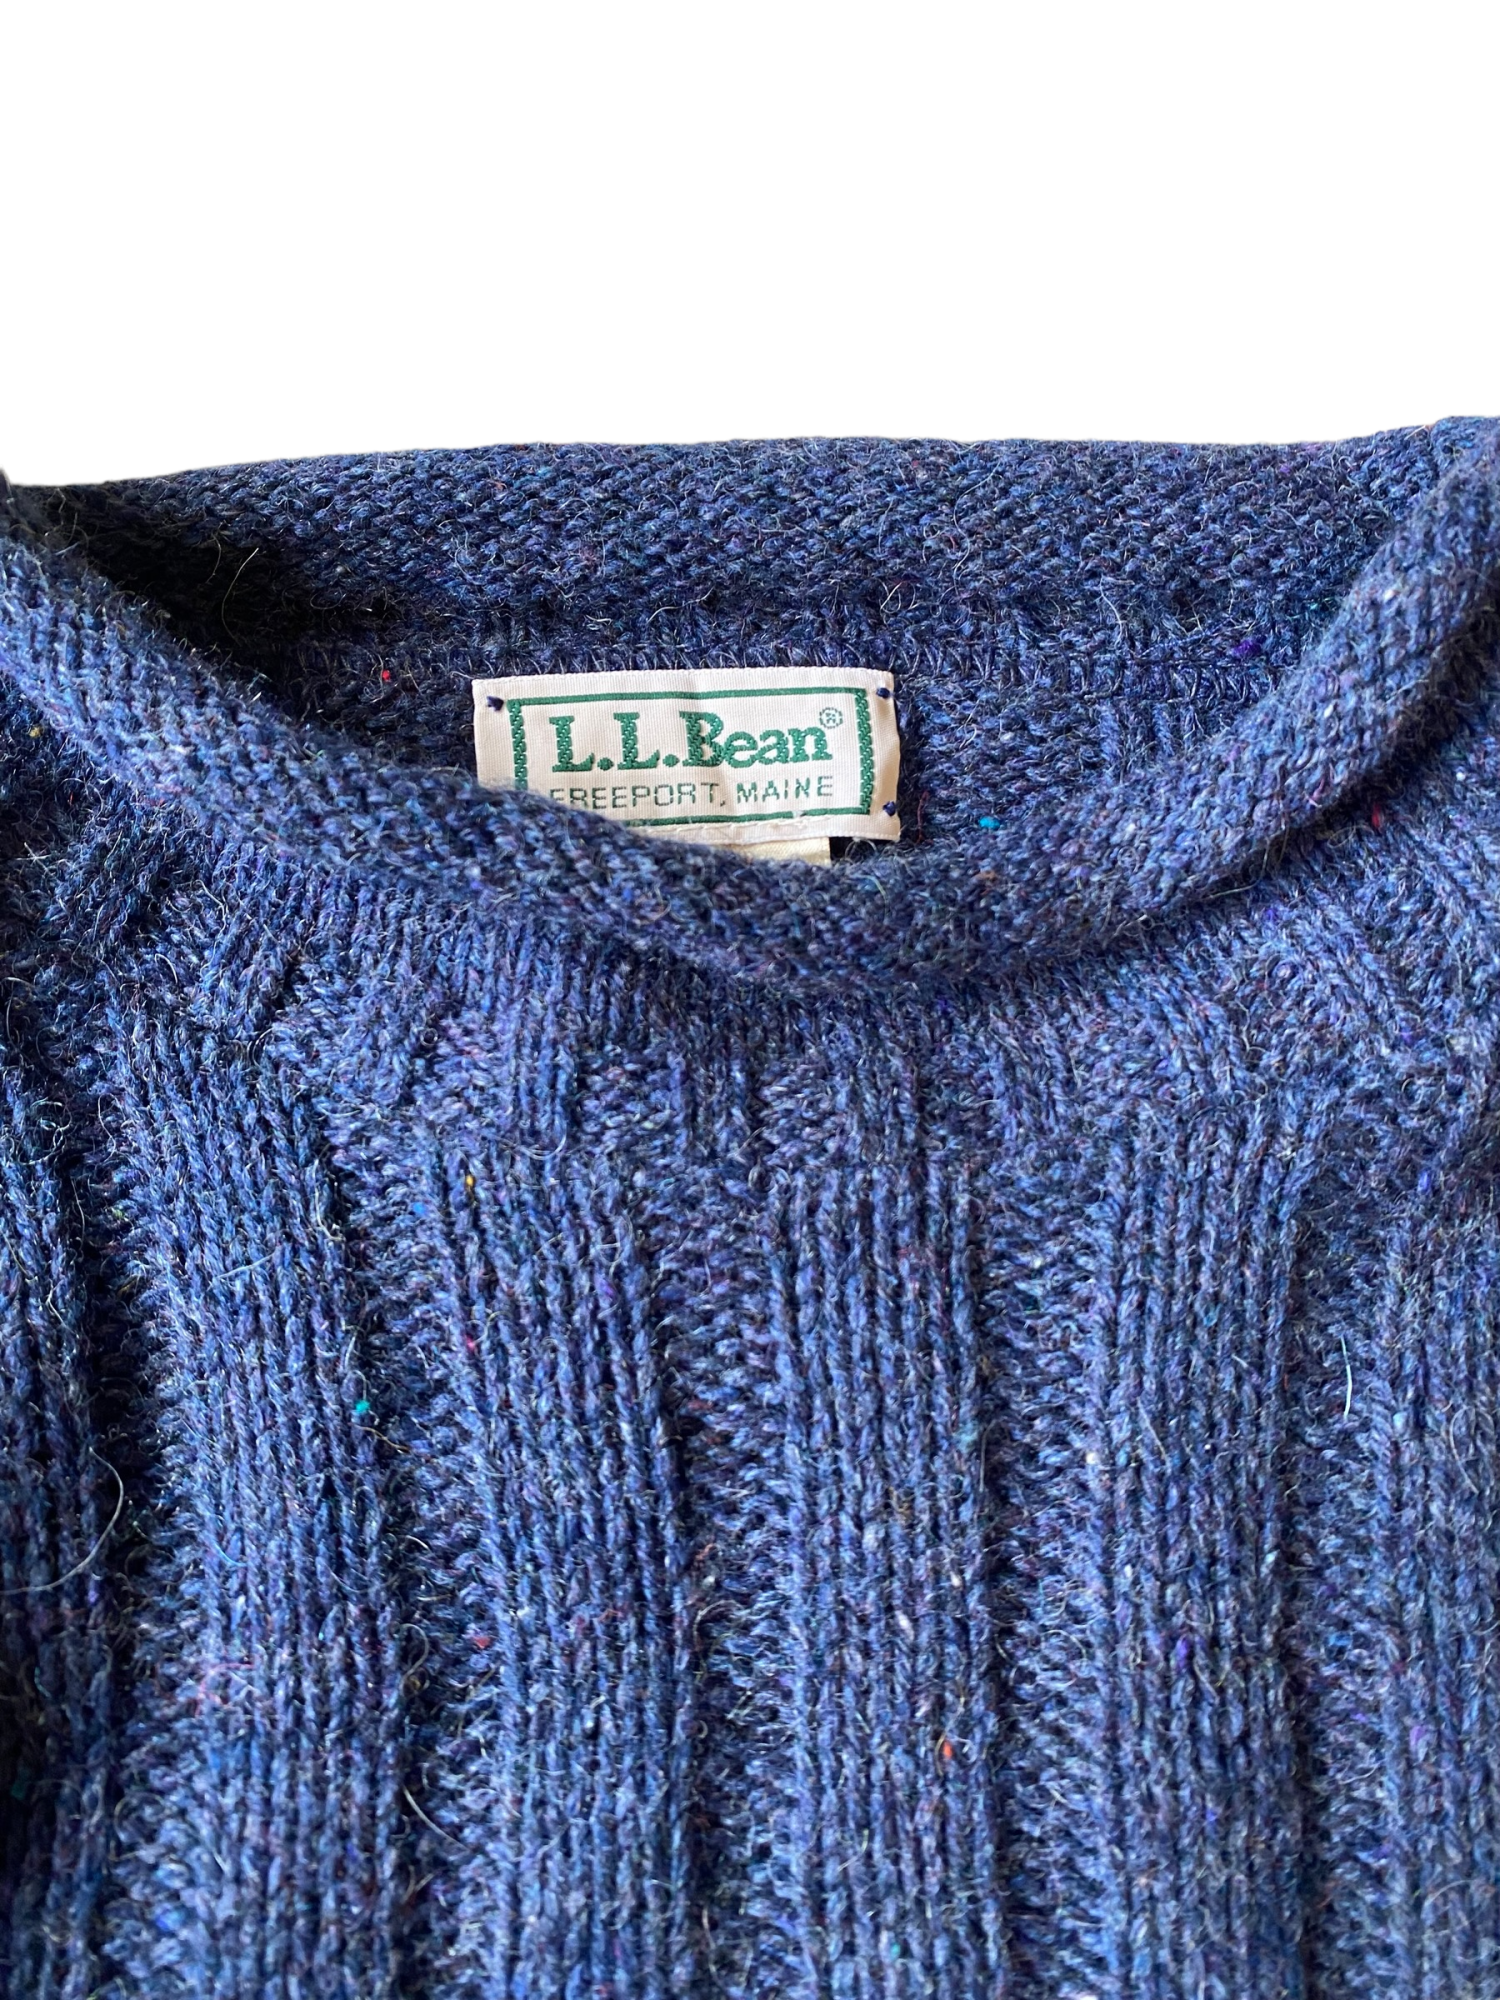 L.L.Bean knit made in USA